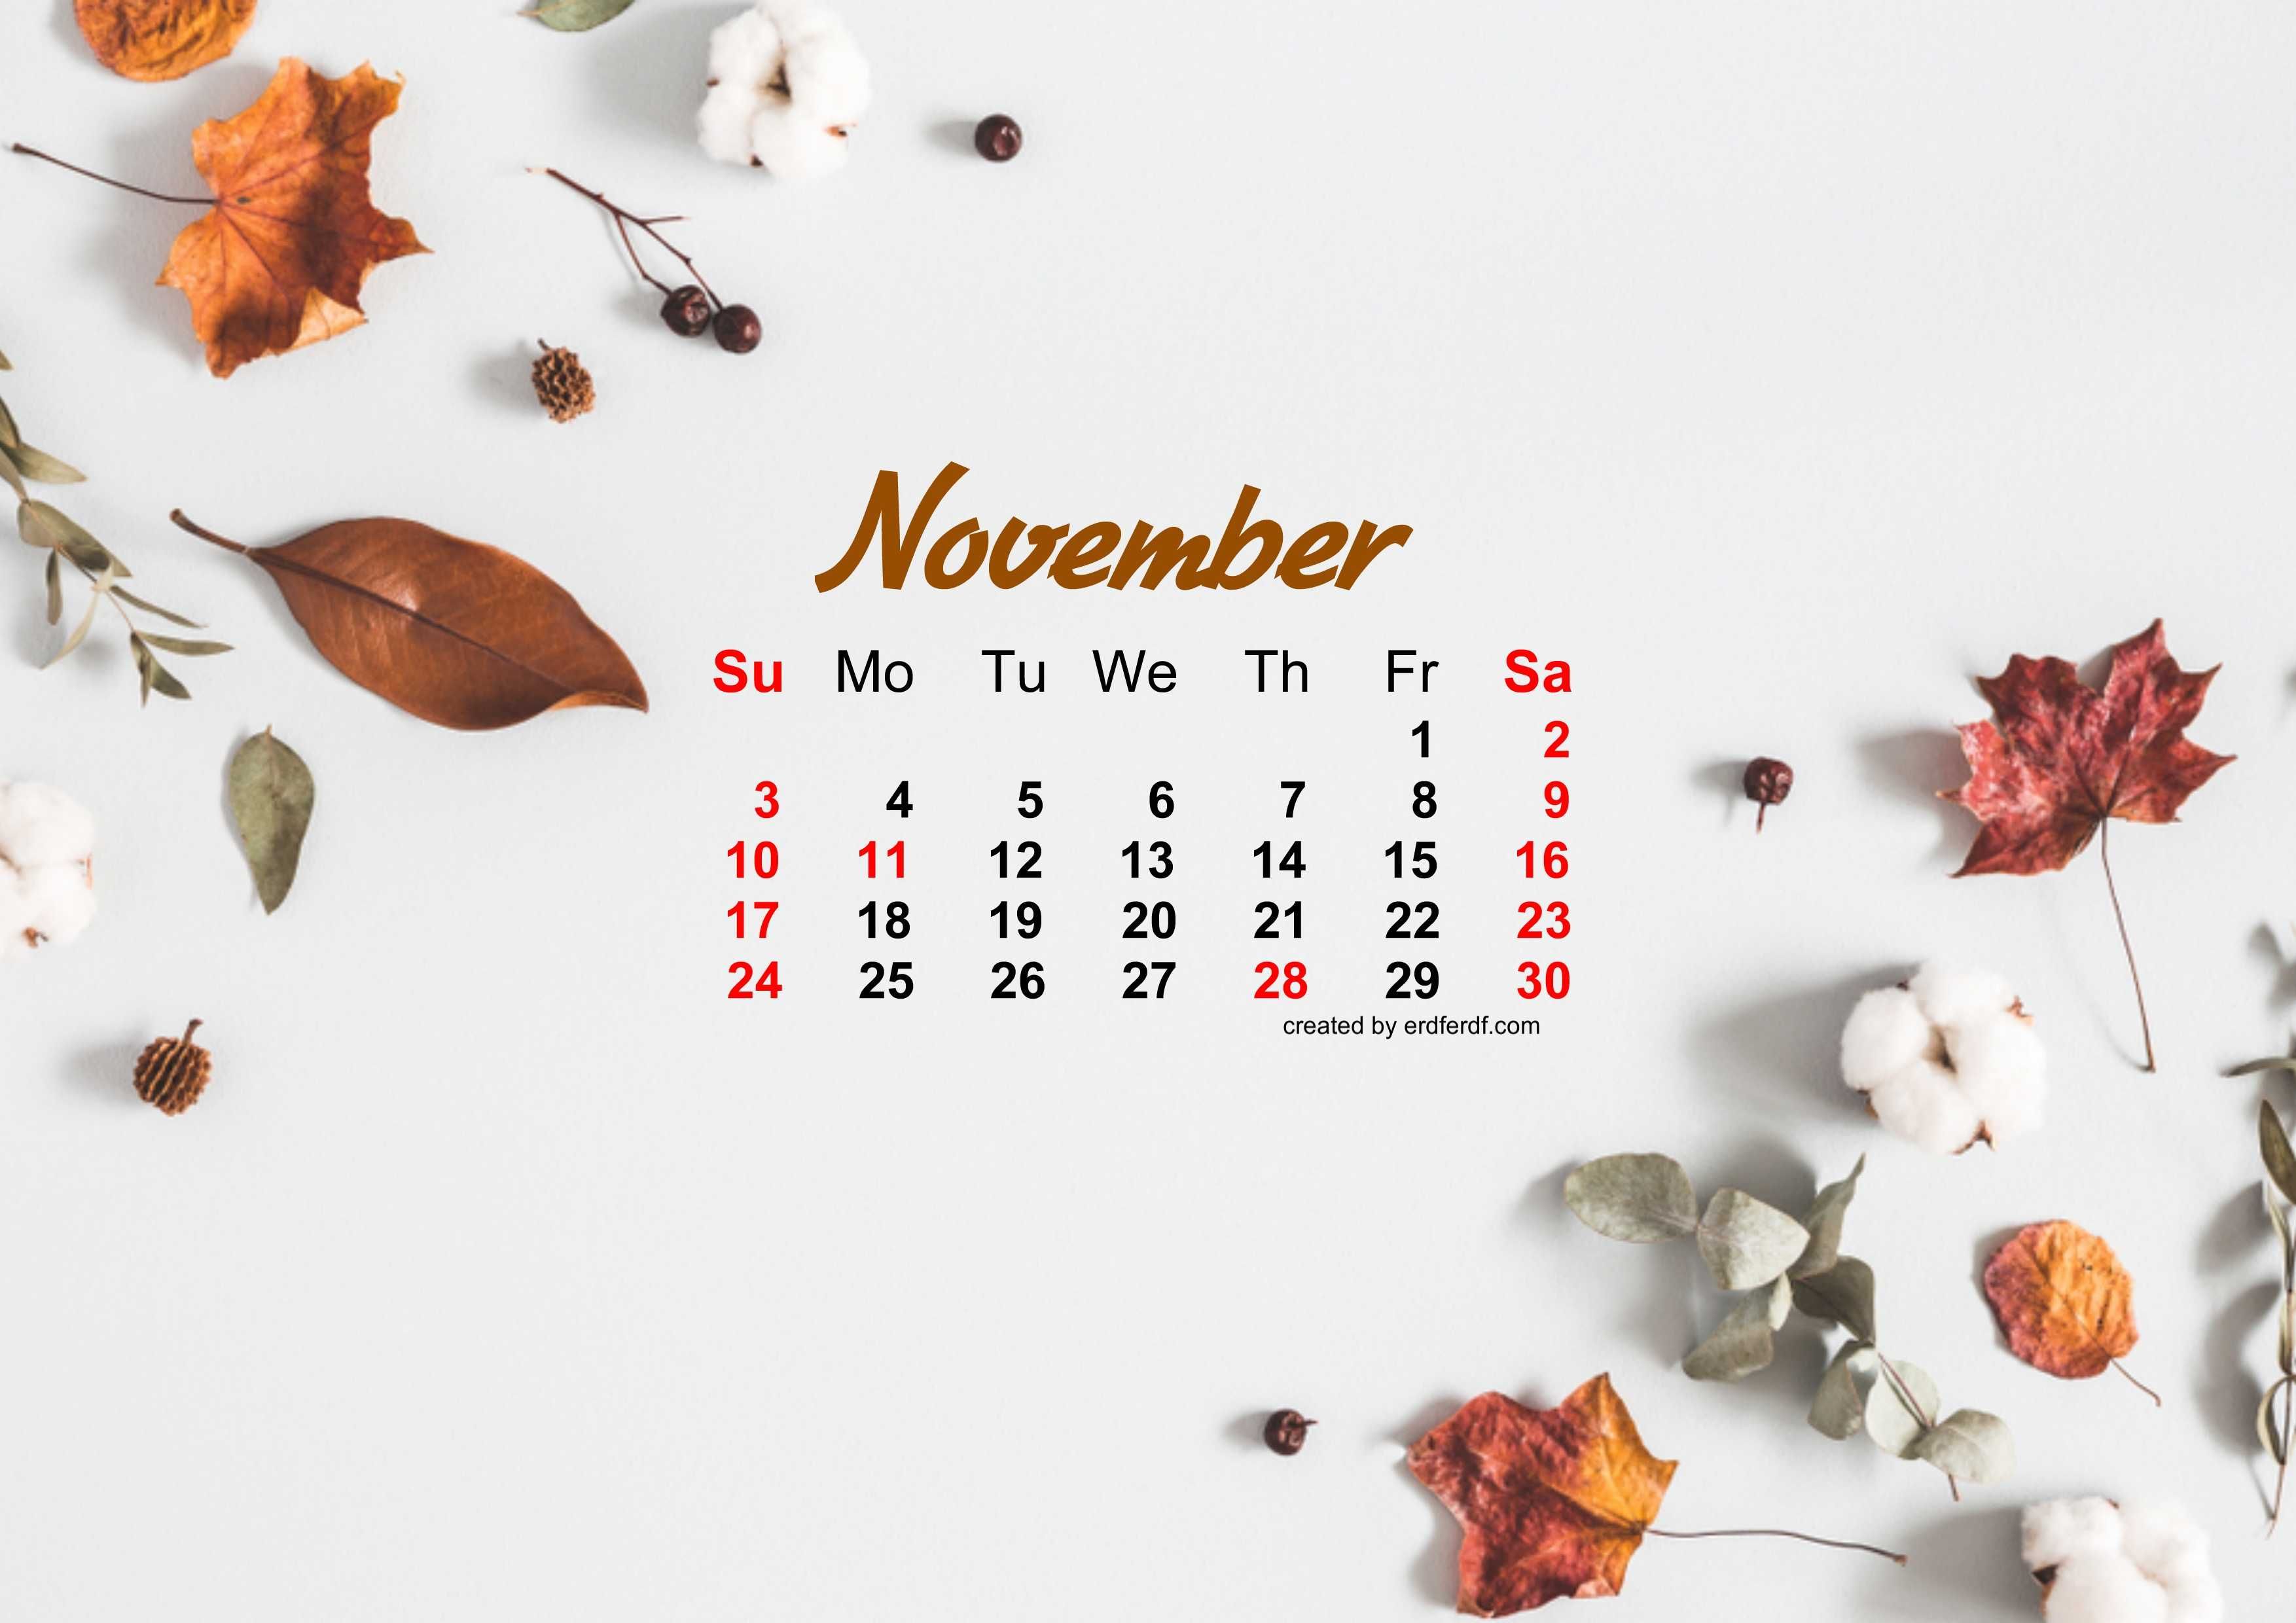 November 2022 Calendar Backgrounds HD  PixelsTalkNet